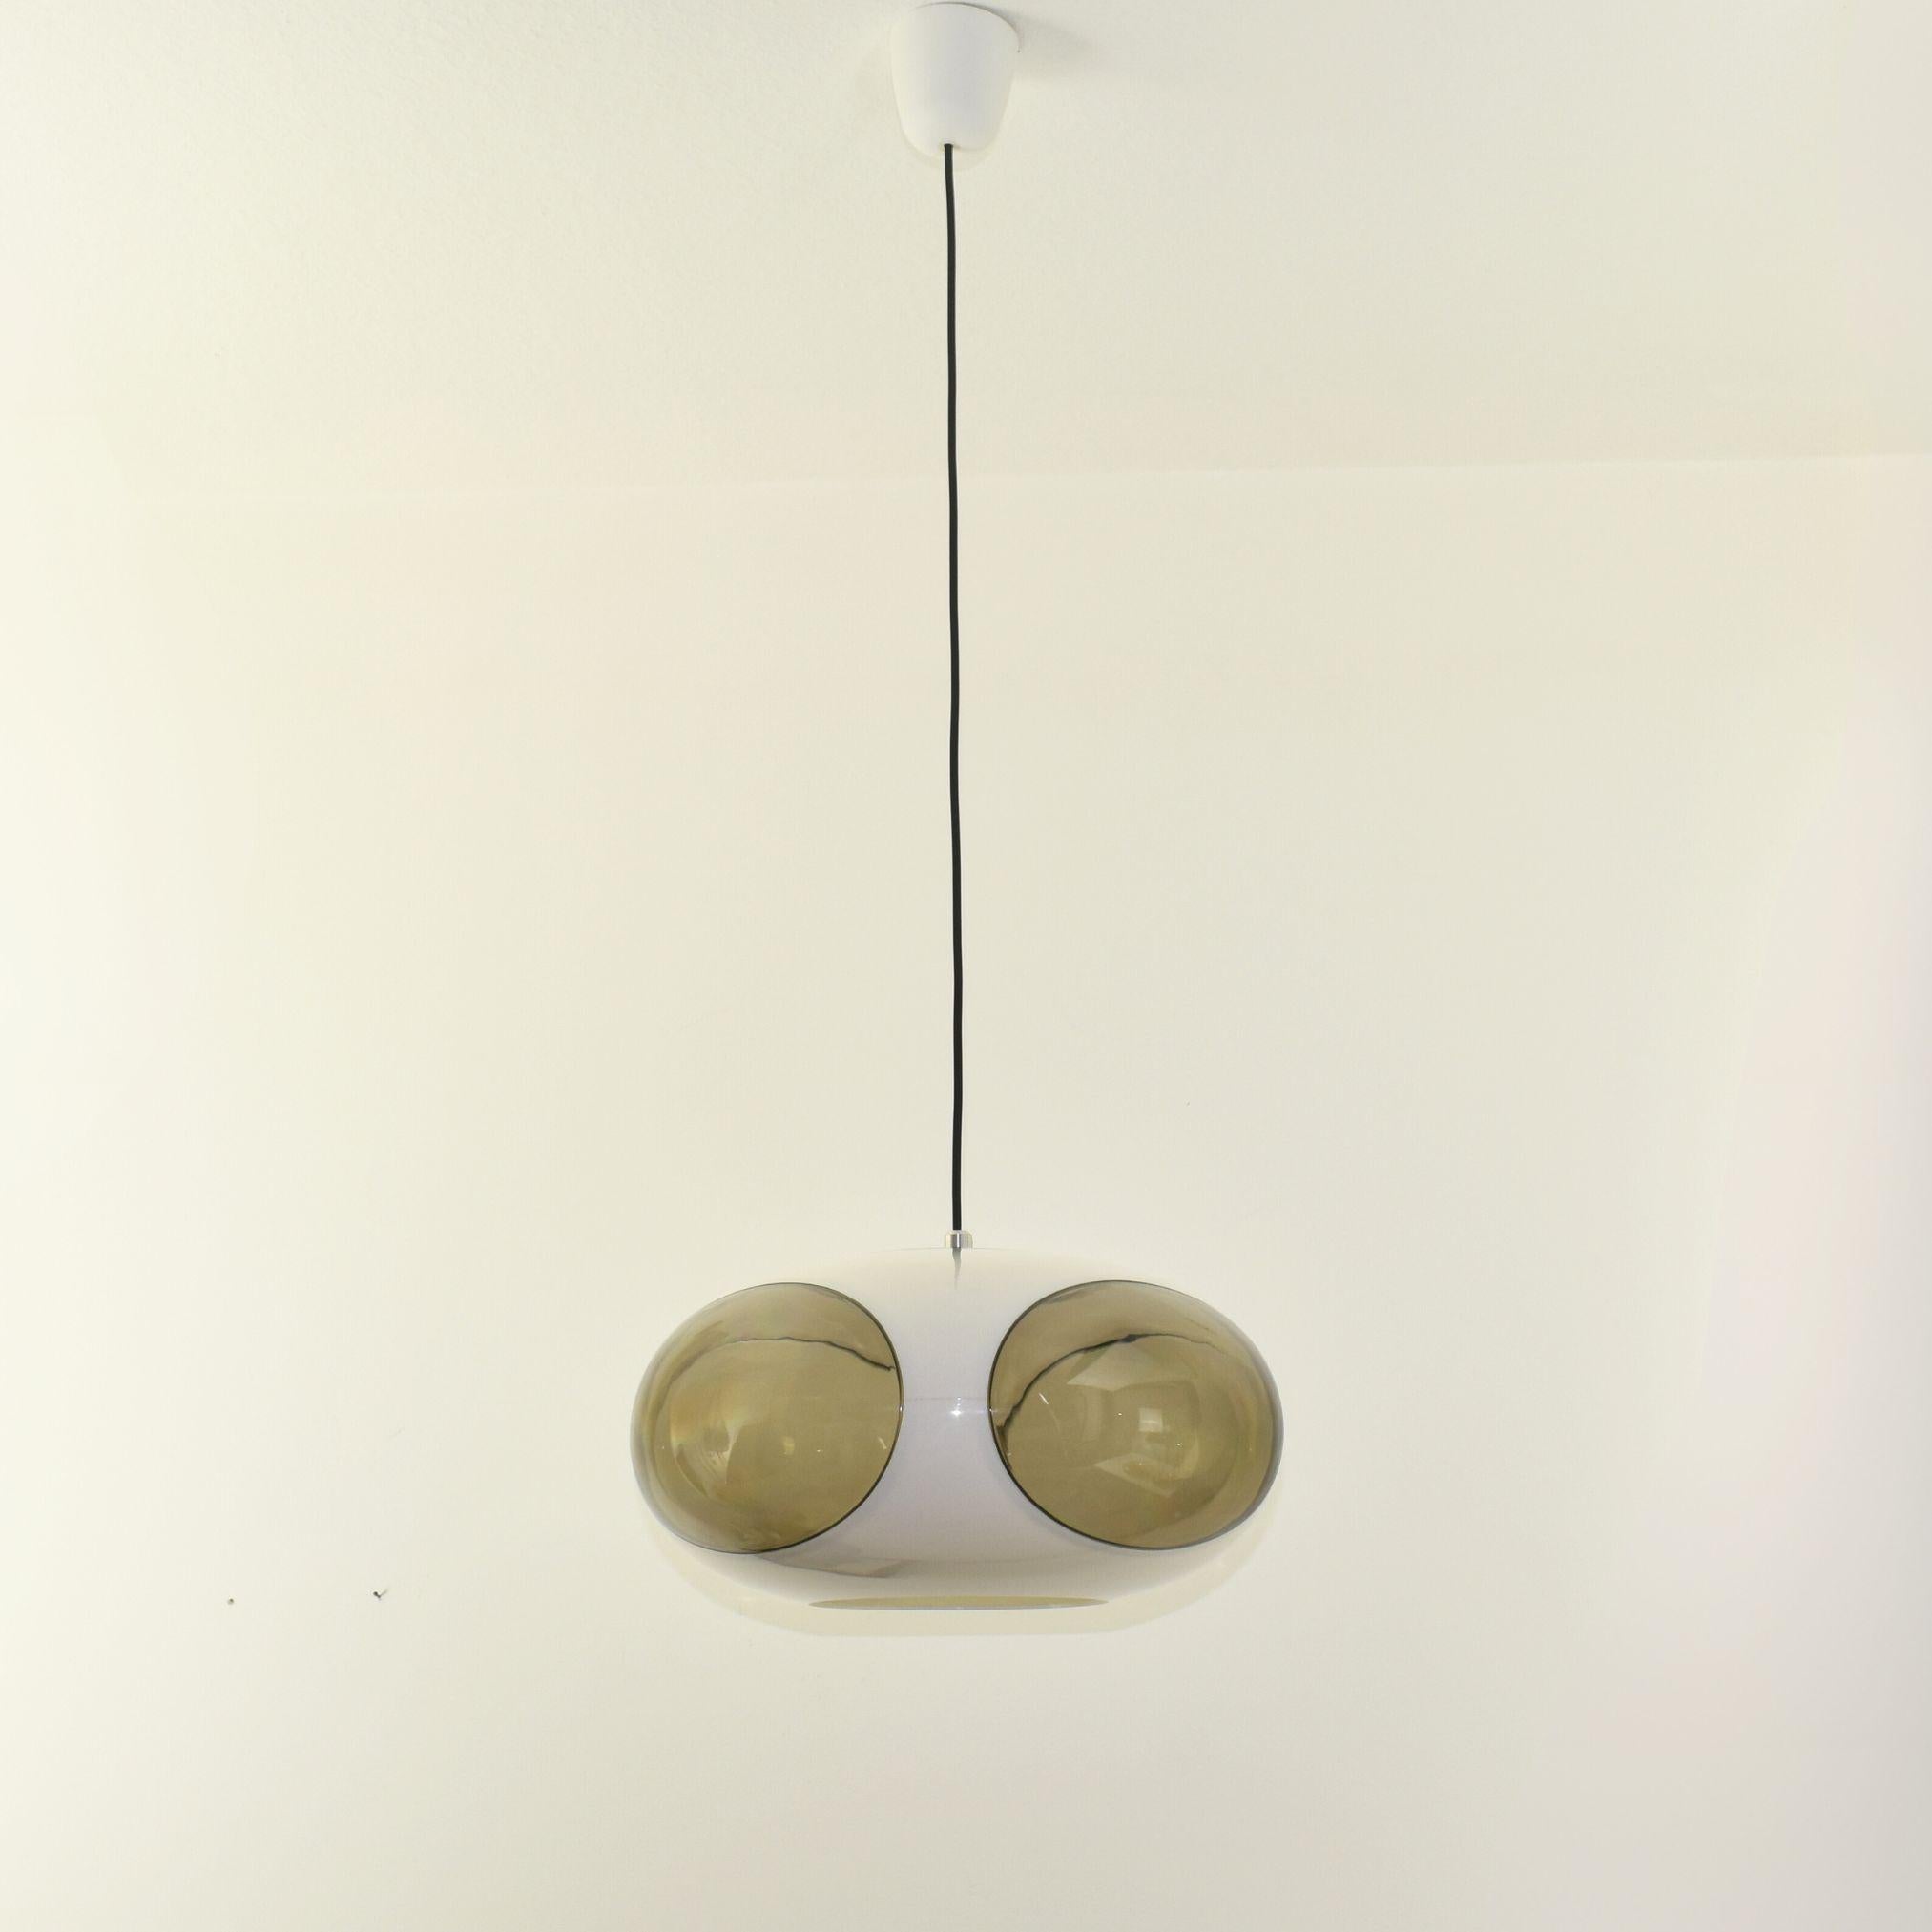 Luigi Colani for Massive Ufo Pendant Lamp Ceiling Suspension Light Space Age In Good Condition For Sale In Bad Säckingen, DE